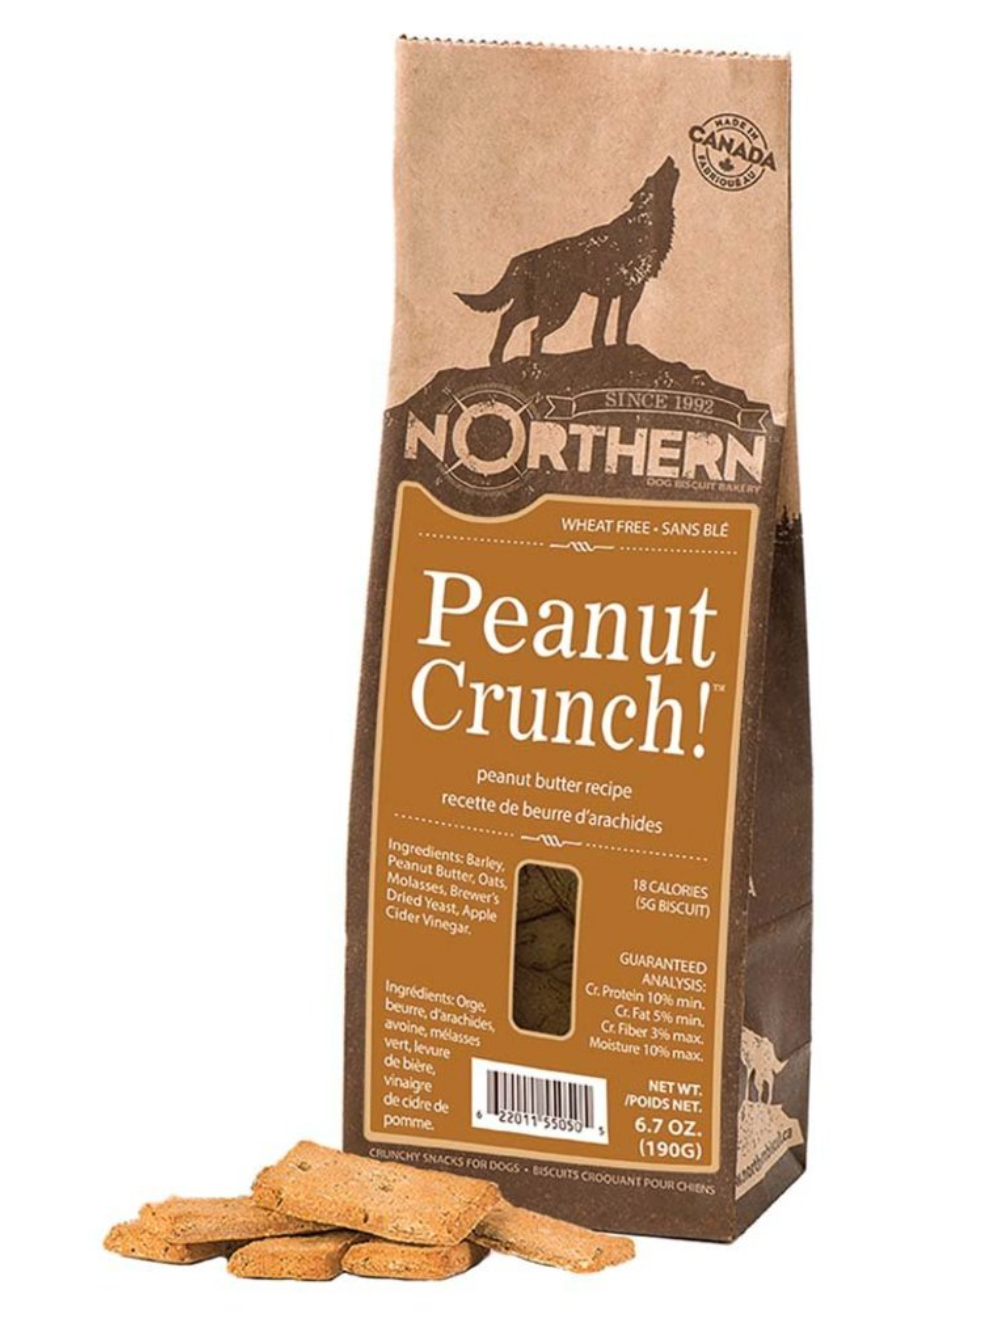 Northern Wheat Free Biscuits – Peanut Crunch